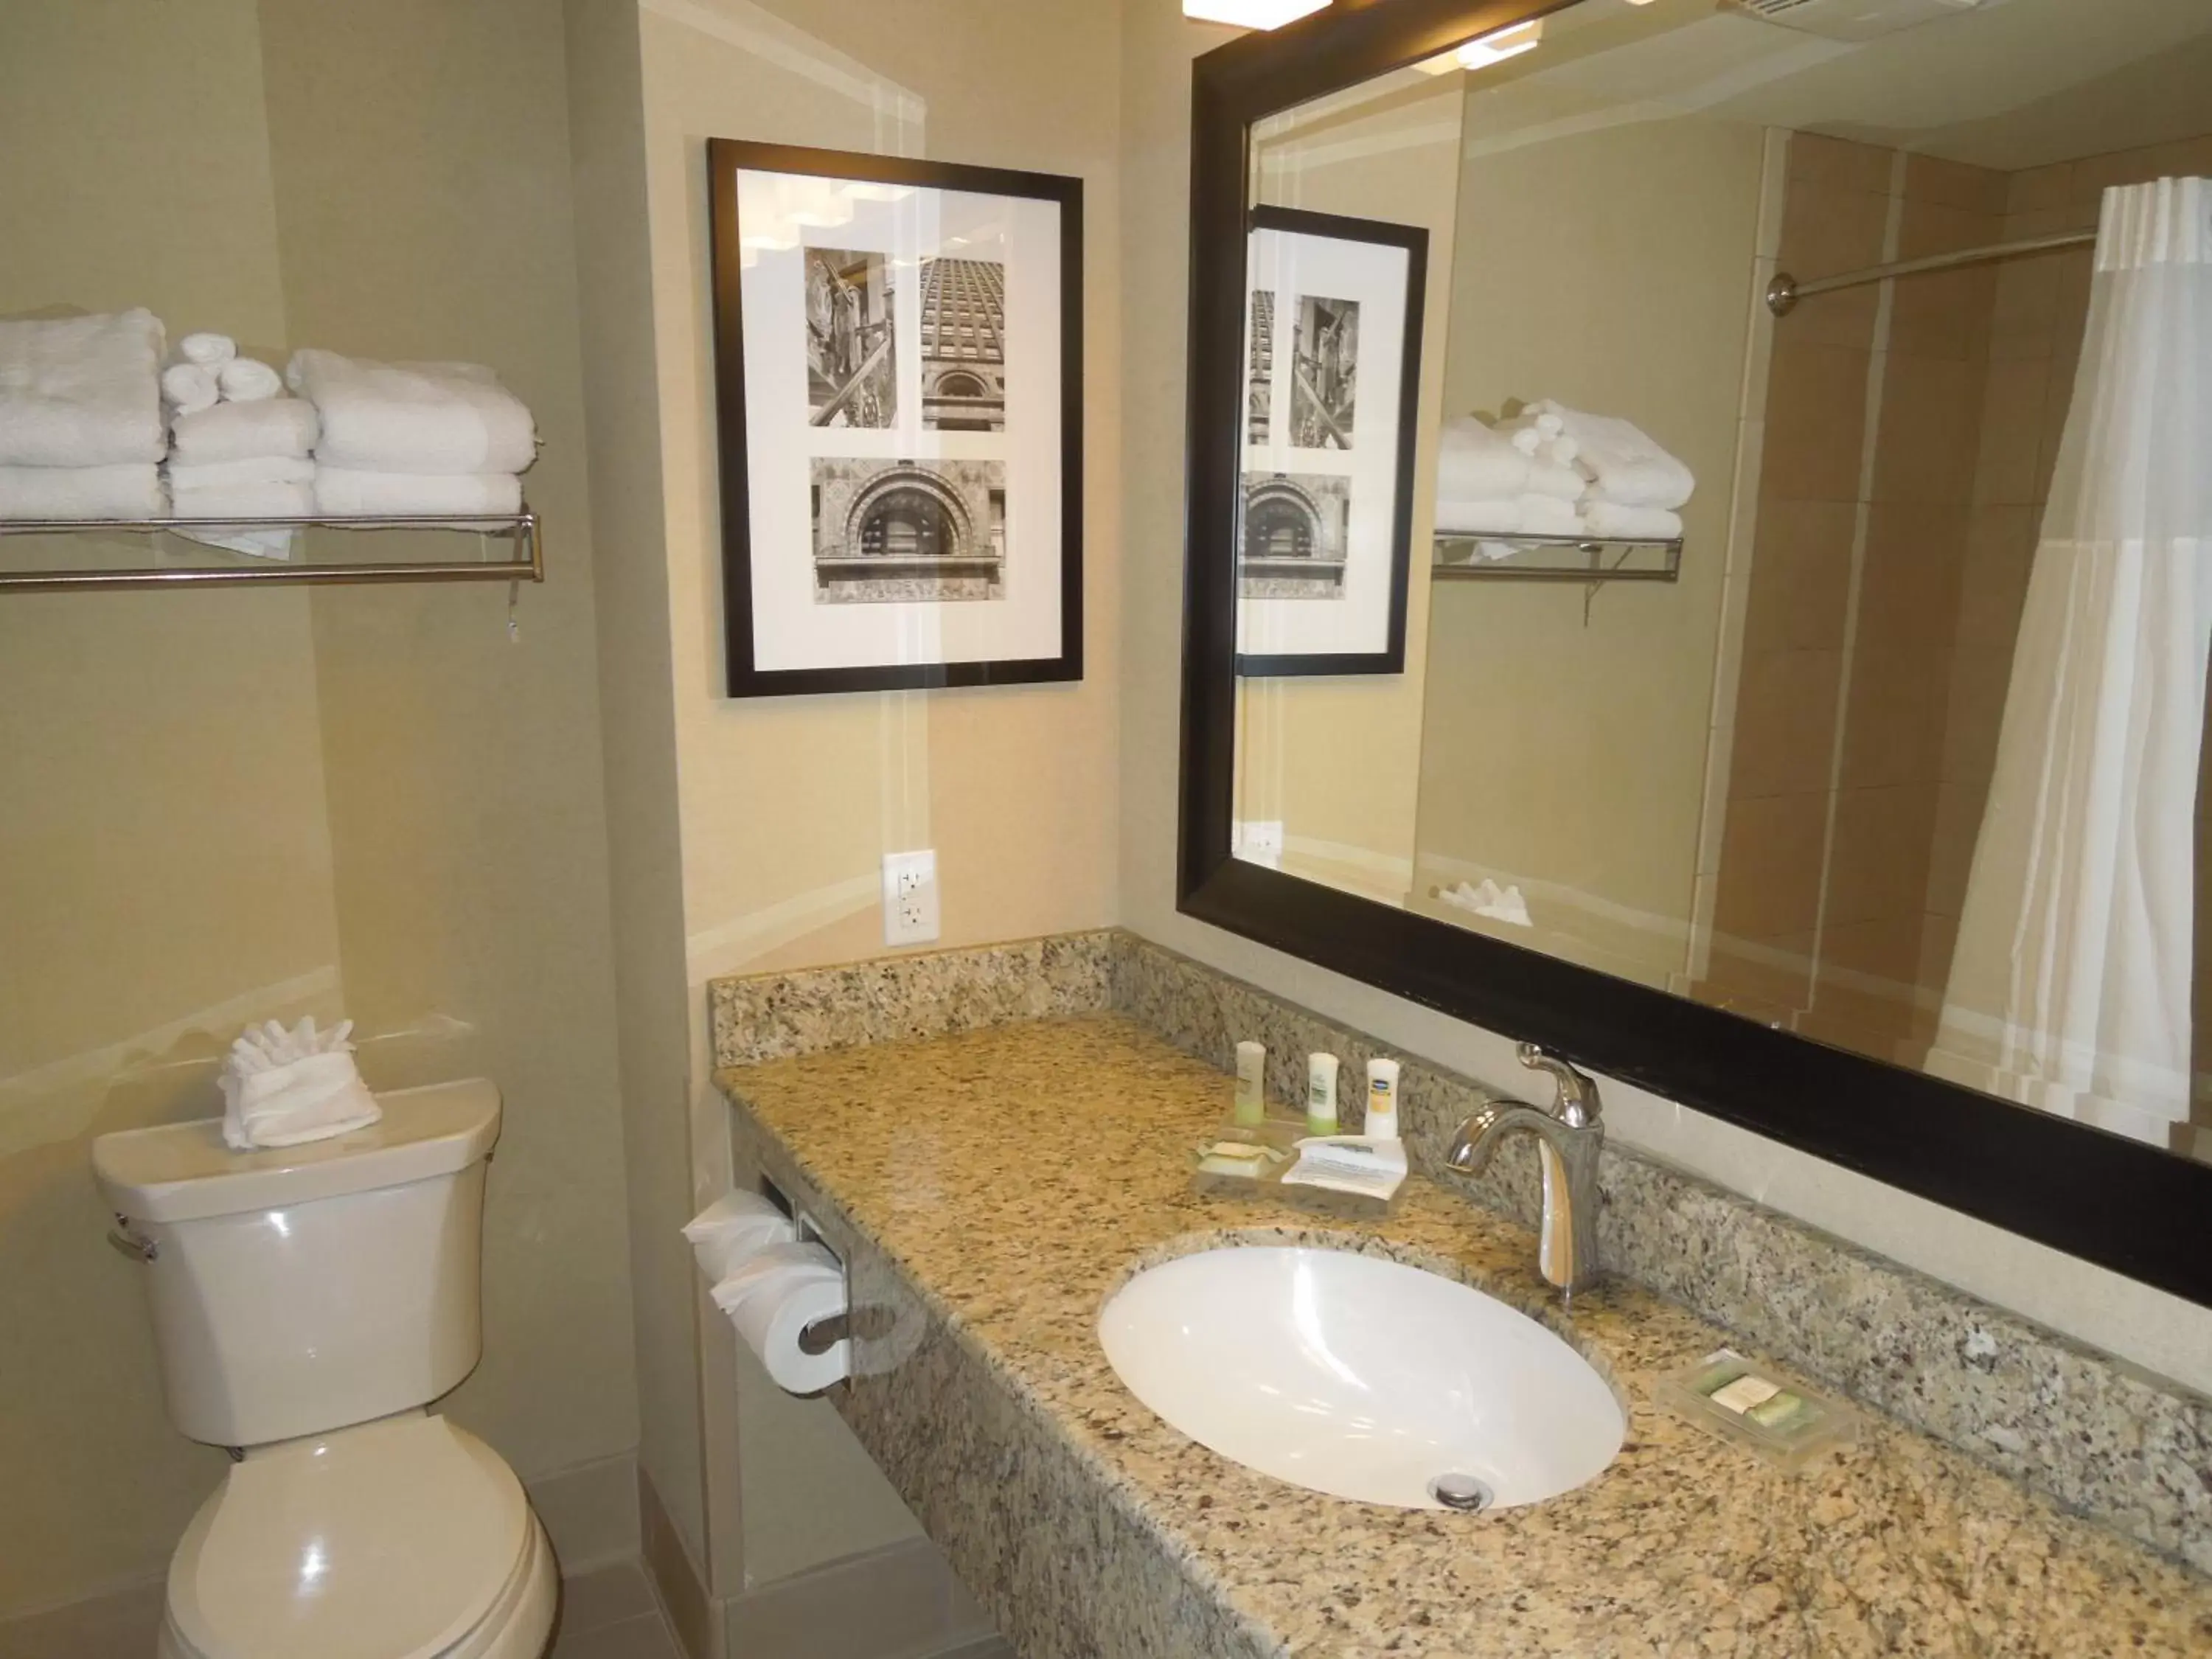 Bathroom in Country Inn & Suites Buffalo South I-90, NY